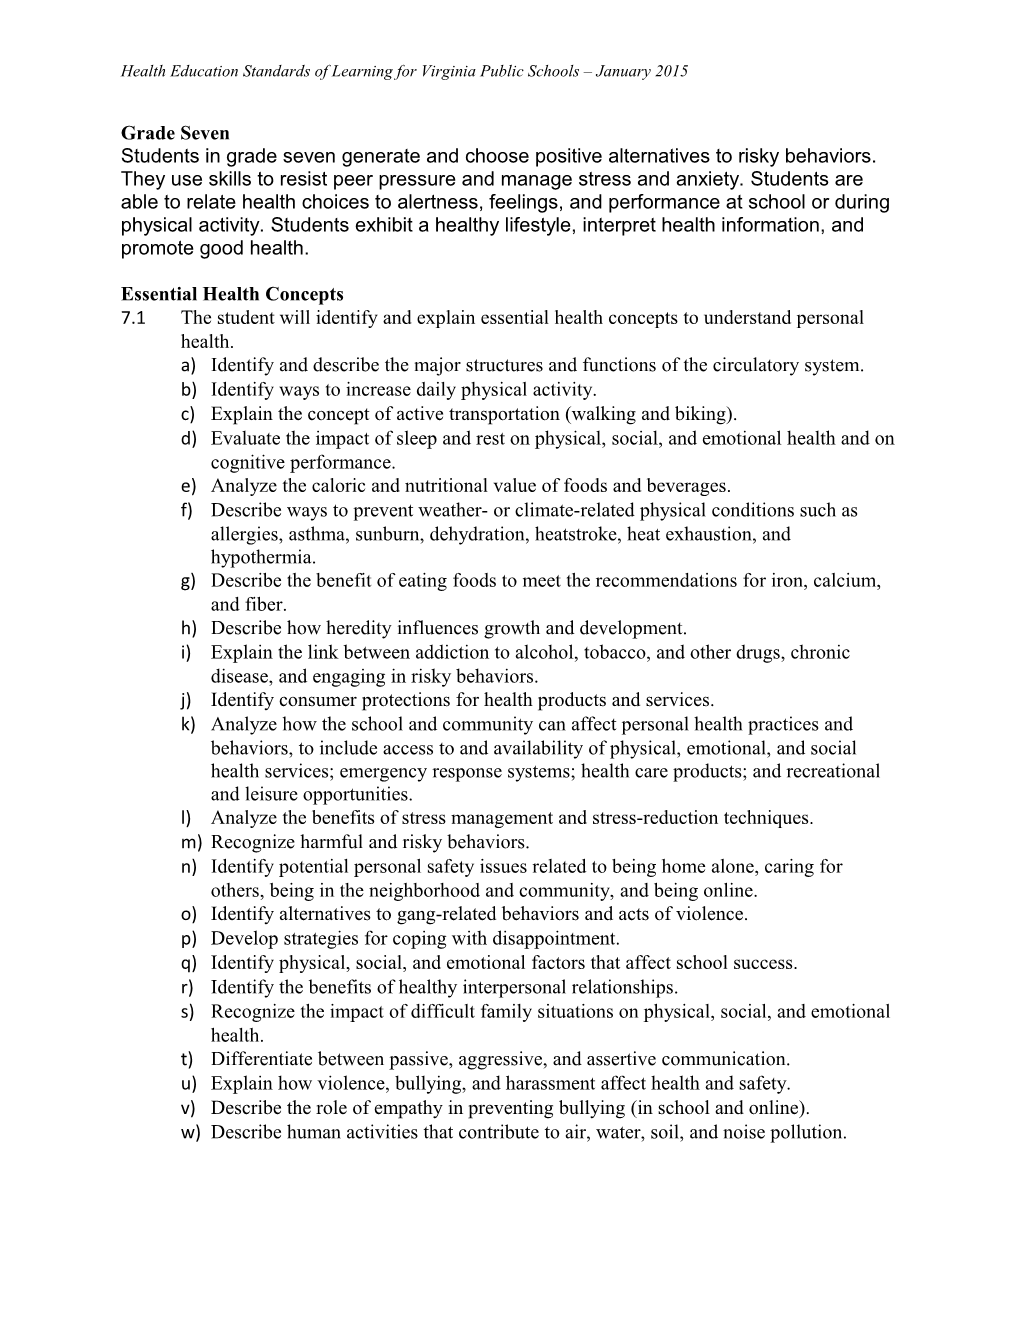 Grade Seven Standards of Learning for Virginia Public Schools